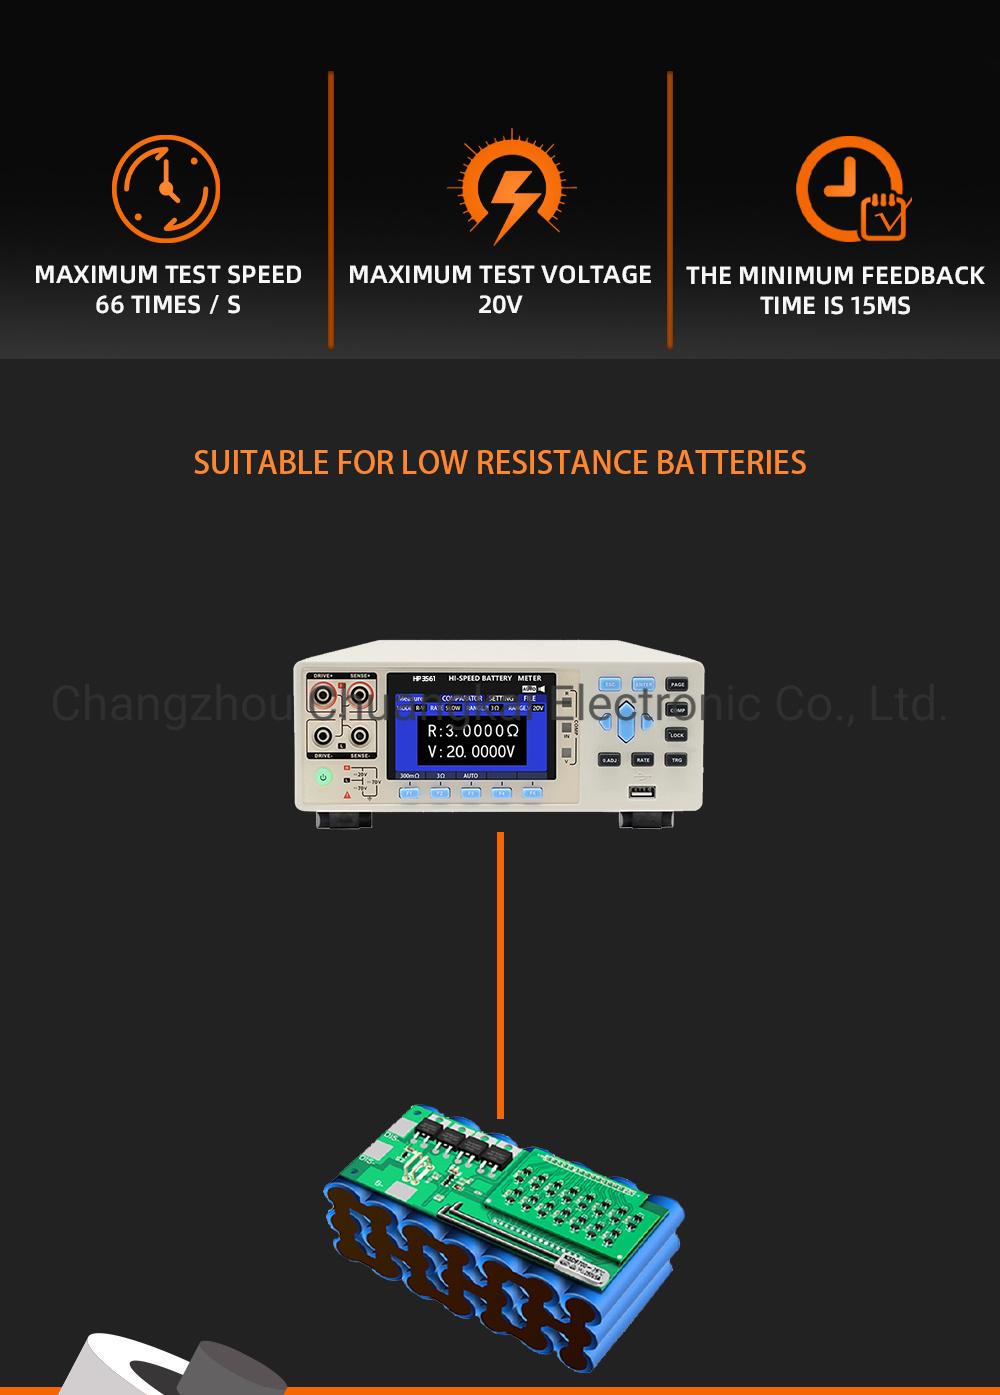 HP3561 New Version Battery Internal Resistance Tester Battery Meter